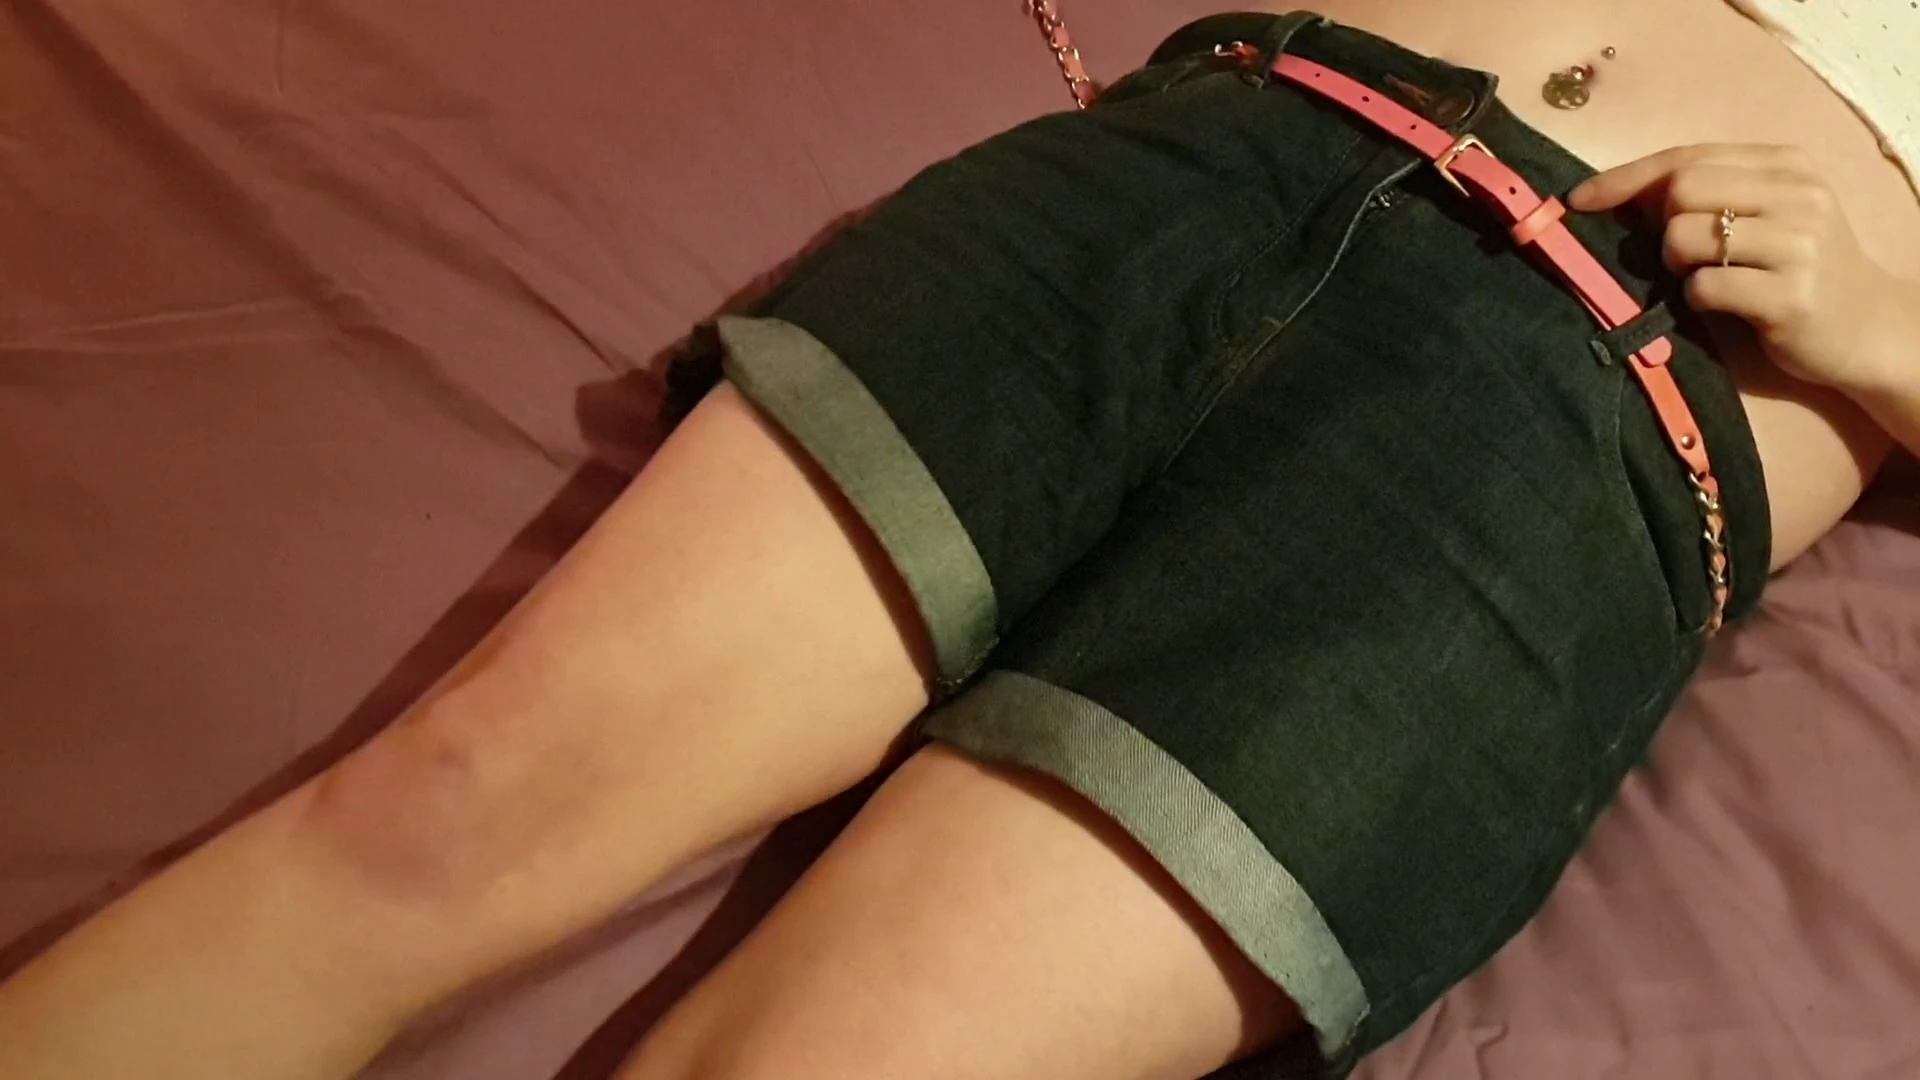 Having a nice warm pee in my denim shorts 🔥 Love that feeling when it pools under my butt 🍑💦